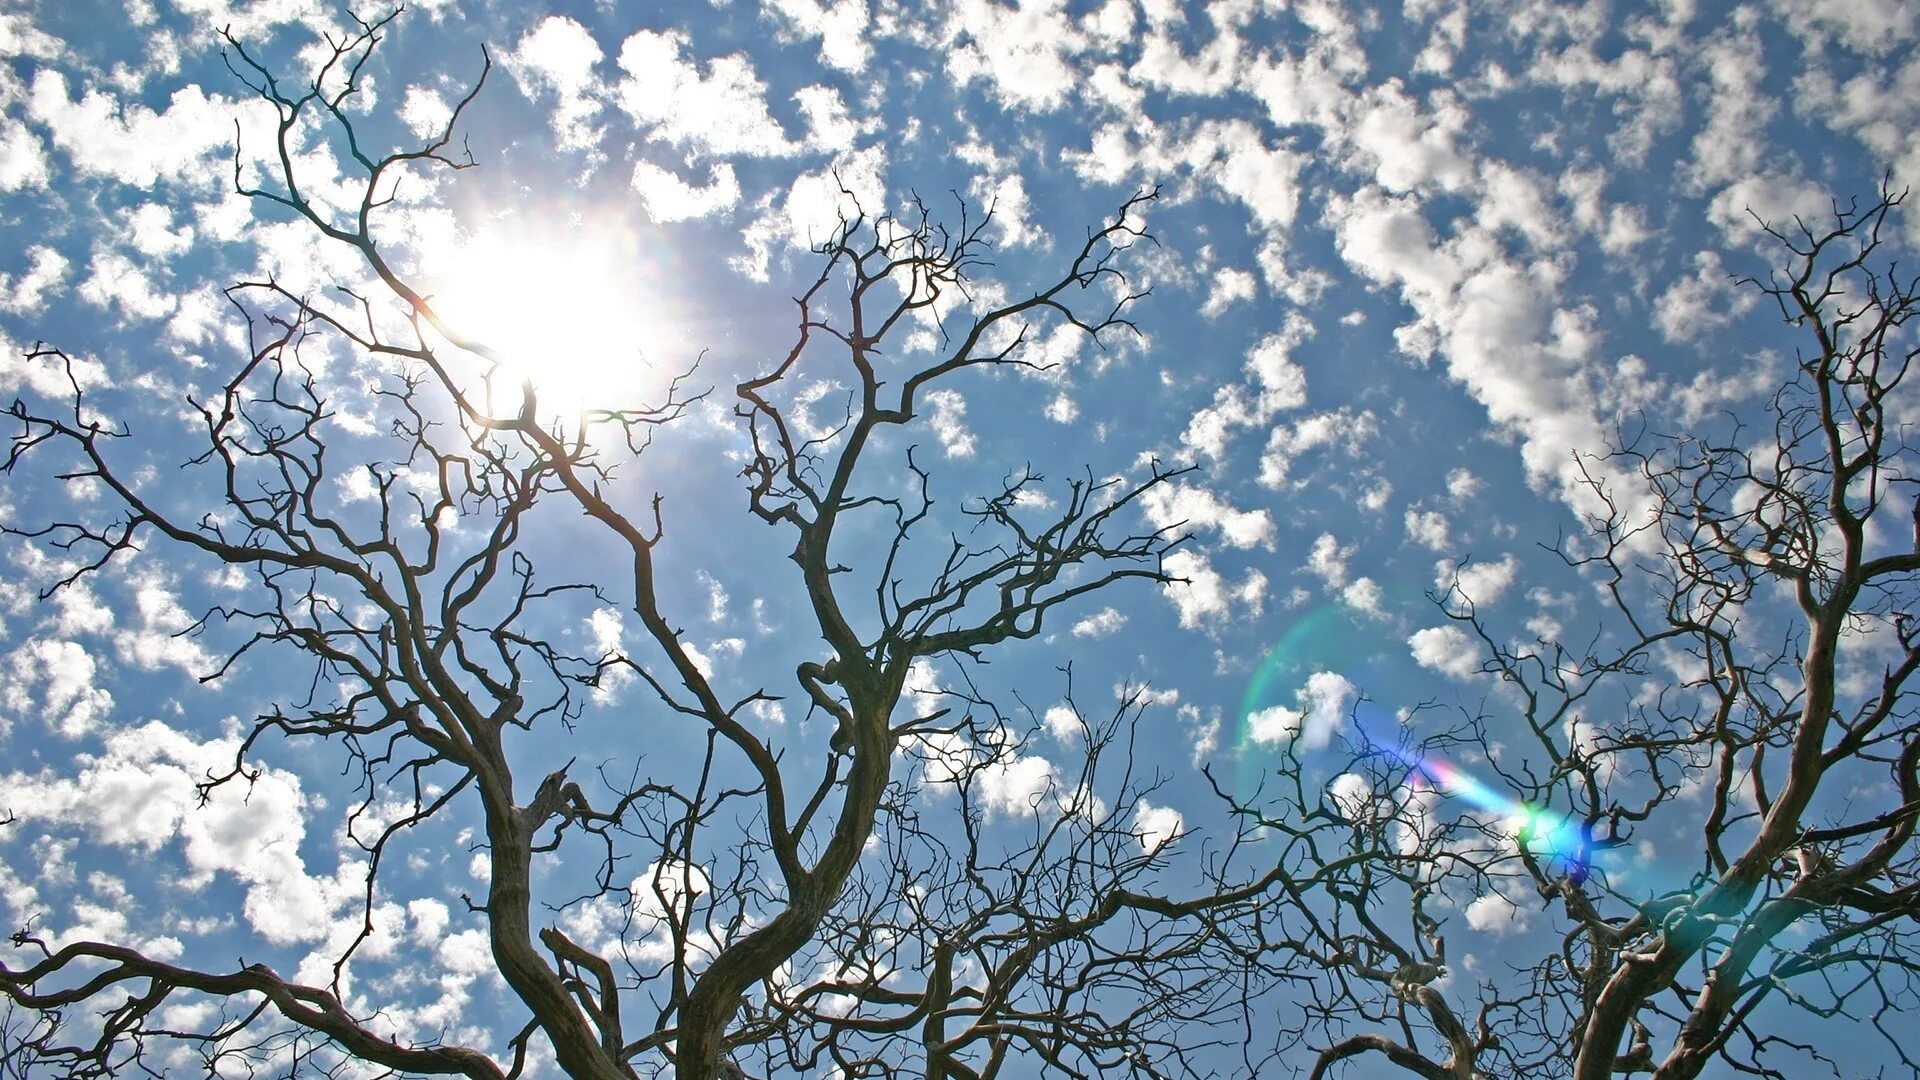 Природа обновилась. Весеннее небо. Дерево на фоне неба.